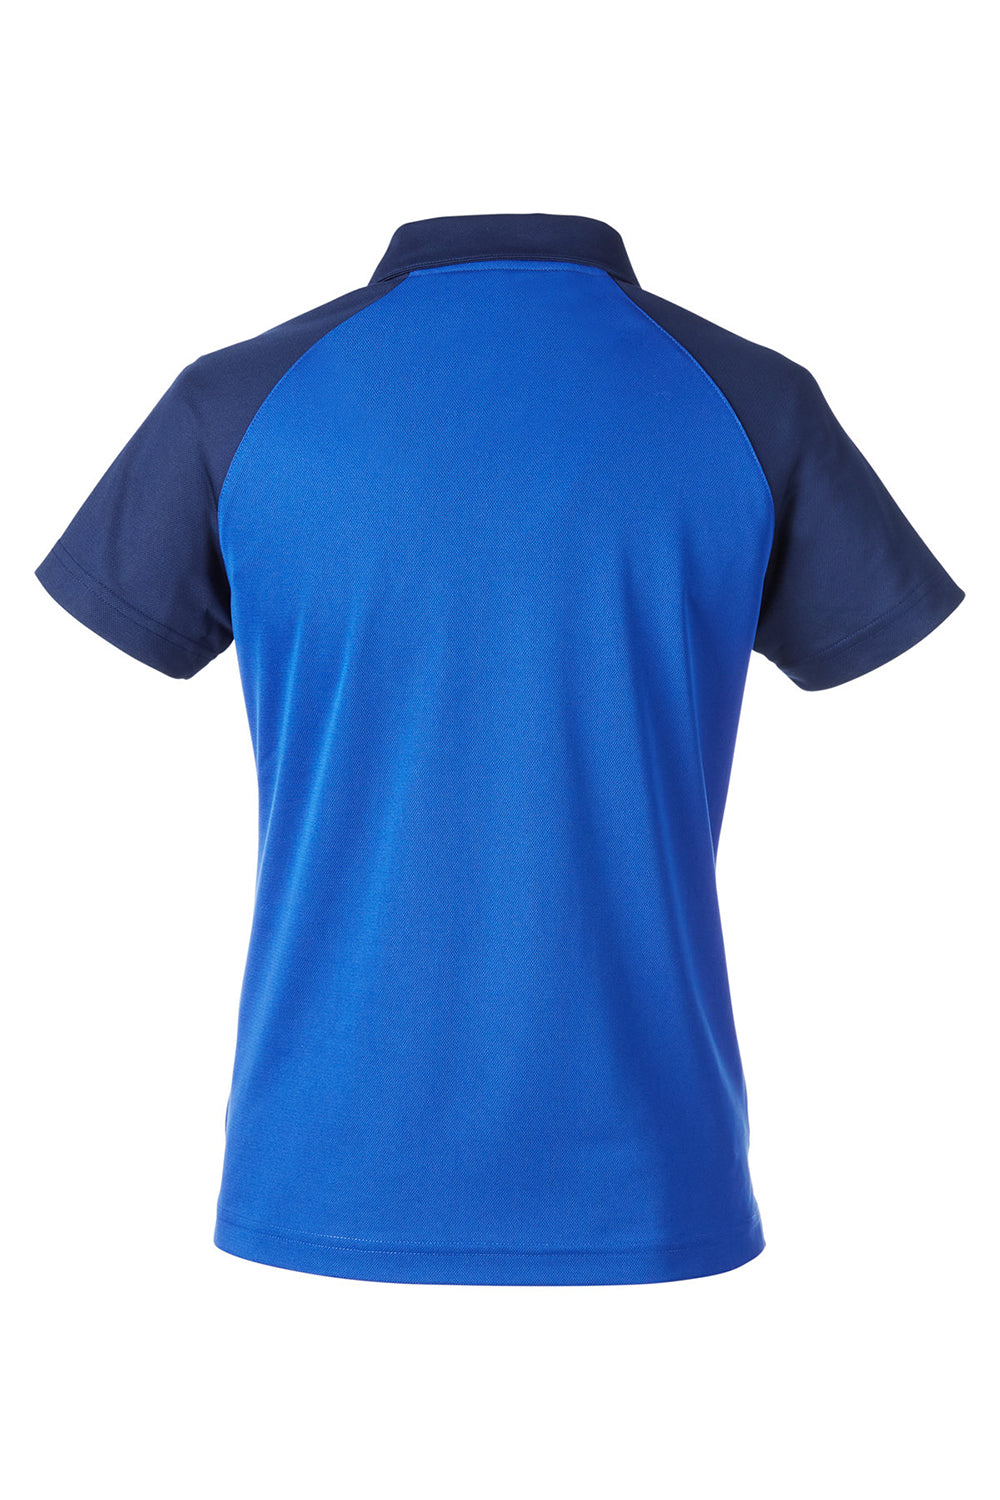 Team 365 TT21CW Womens Command Colorblock Moisture Wicking Short Sleeve Polo Shirt Royal Blue/Dark Navy Blue Flat Back